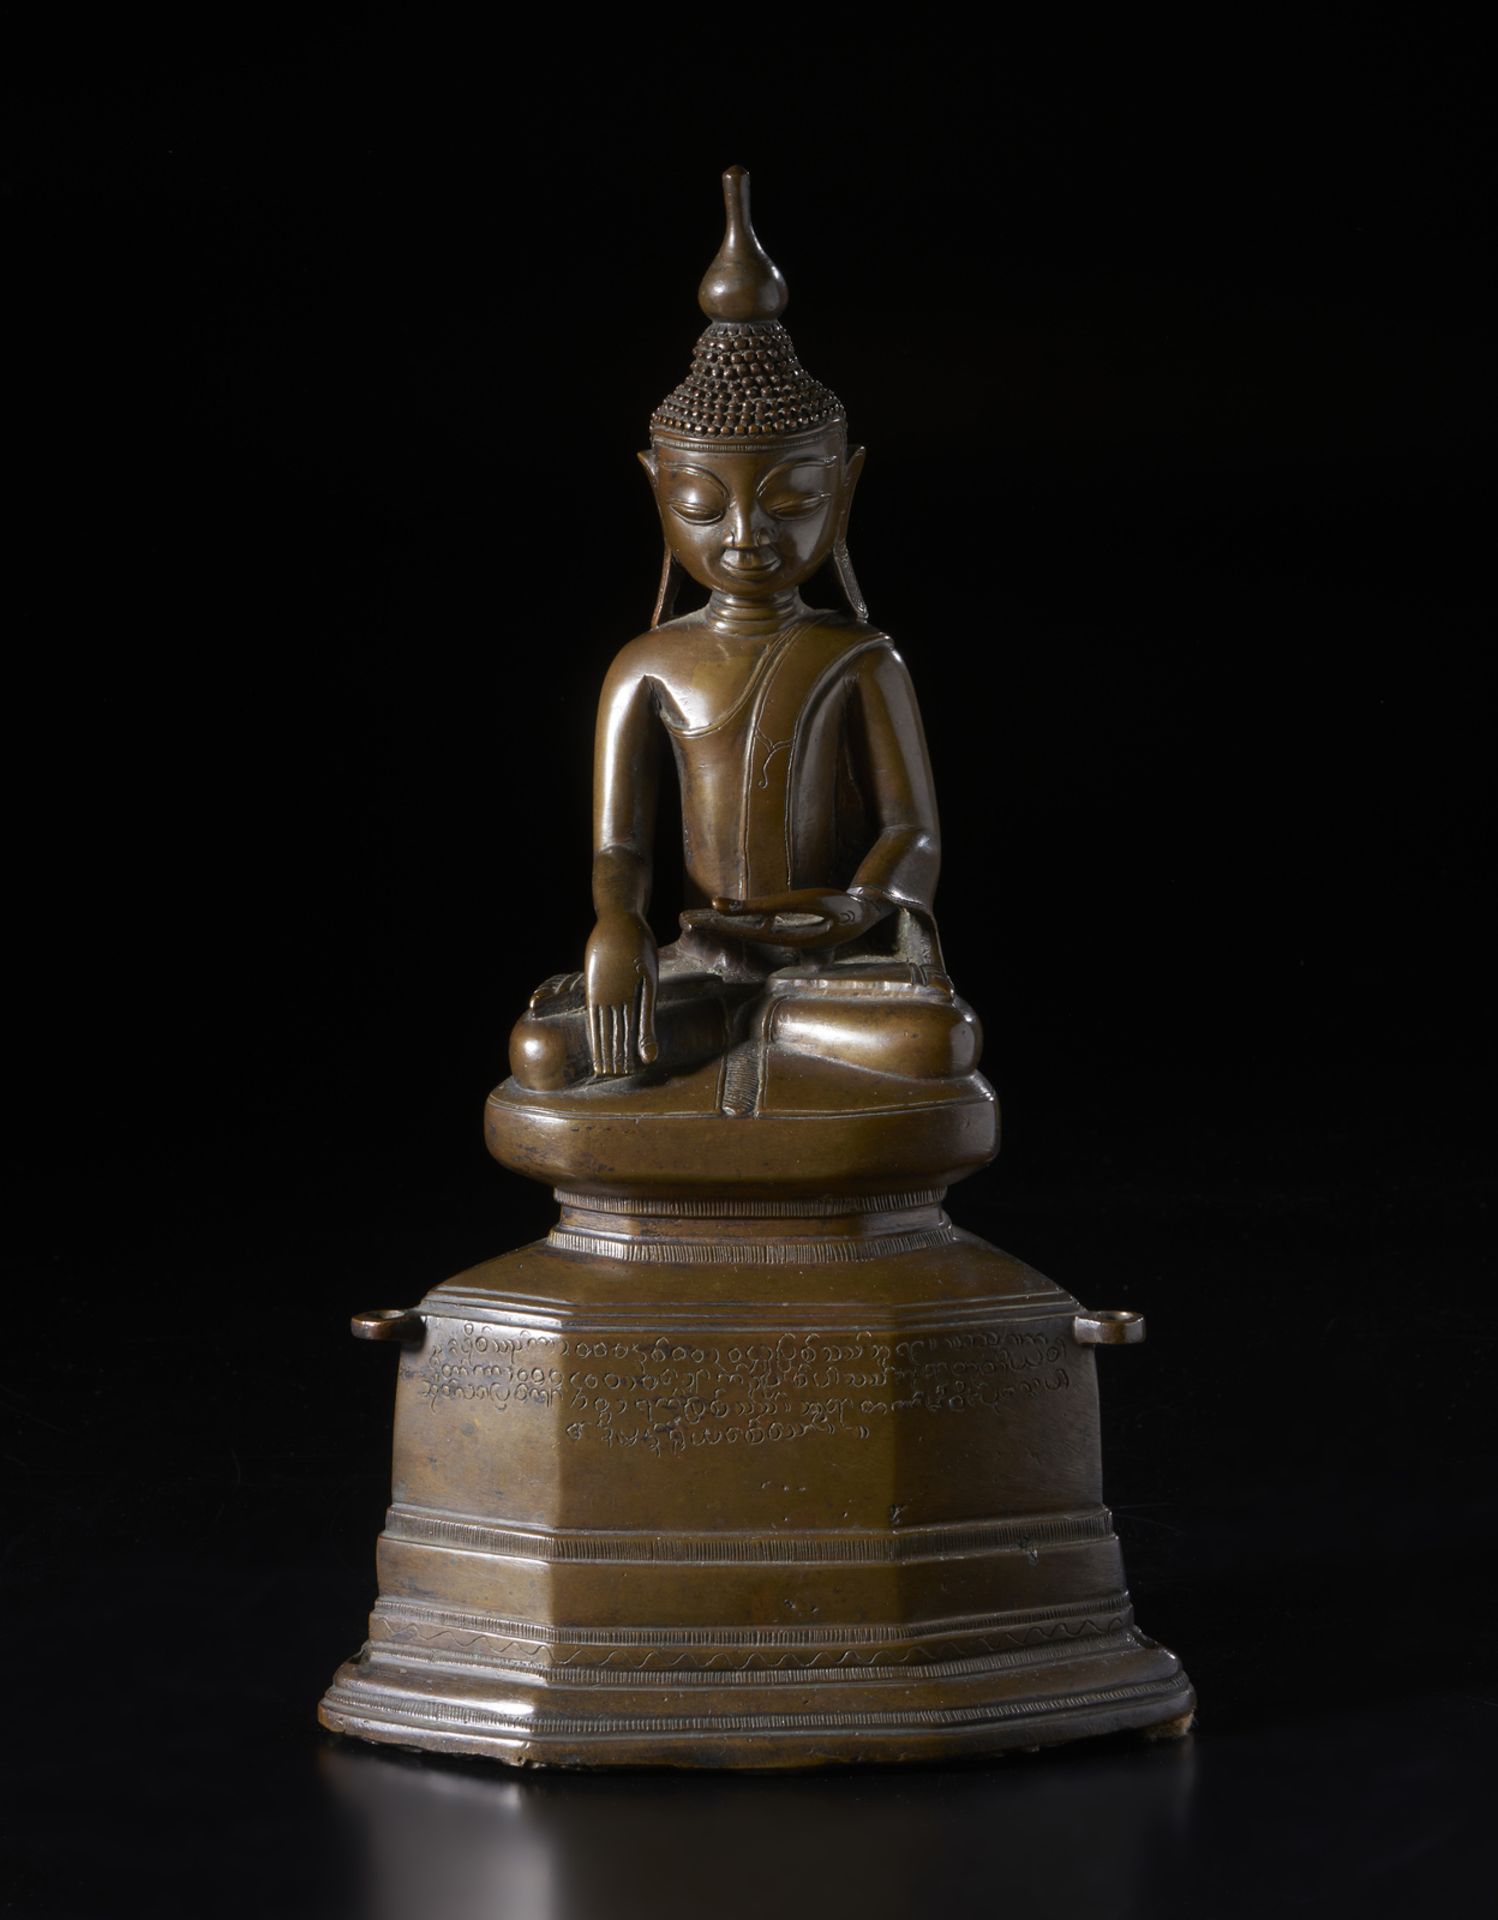 A bronze figure of Buddha Burma, 18th century Bronze casting depicting the historical Buddha